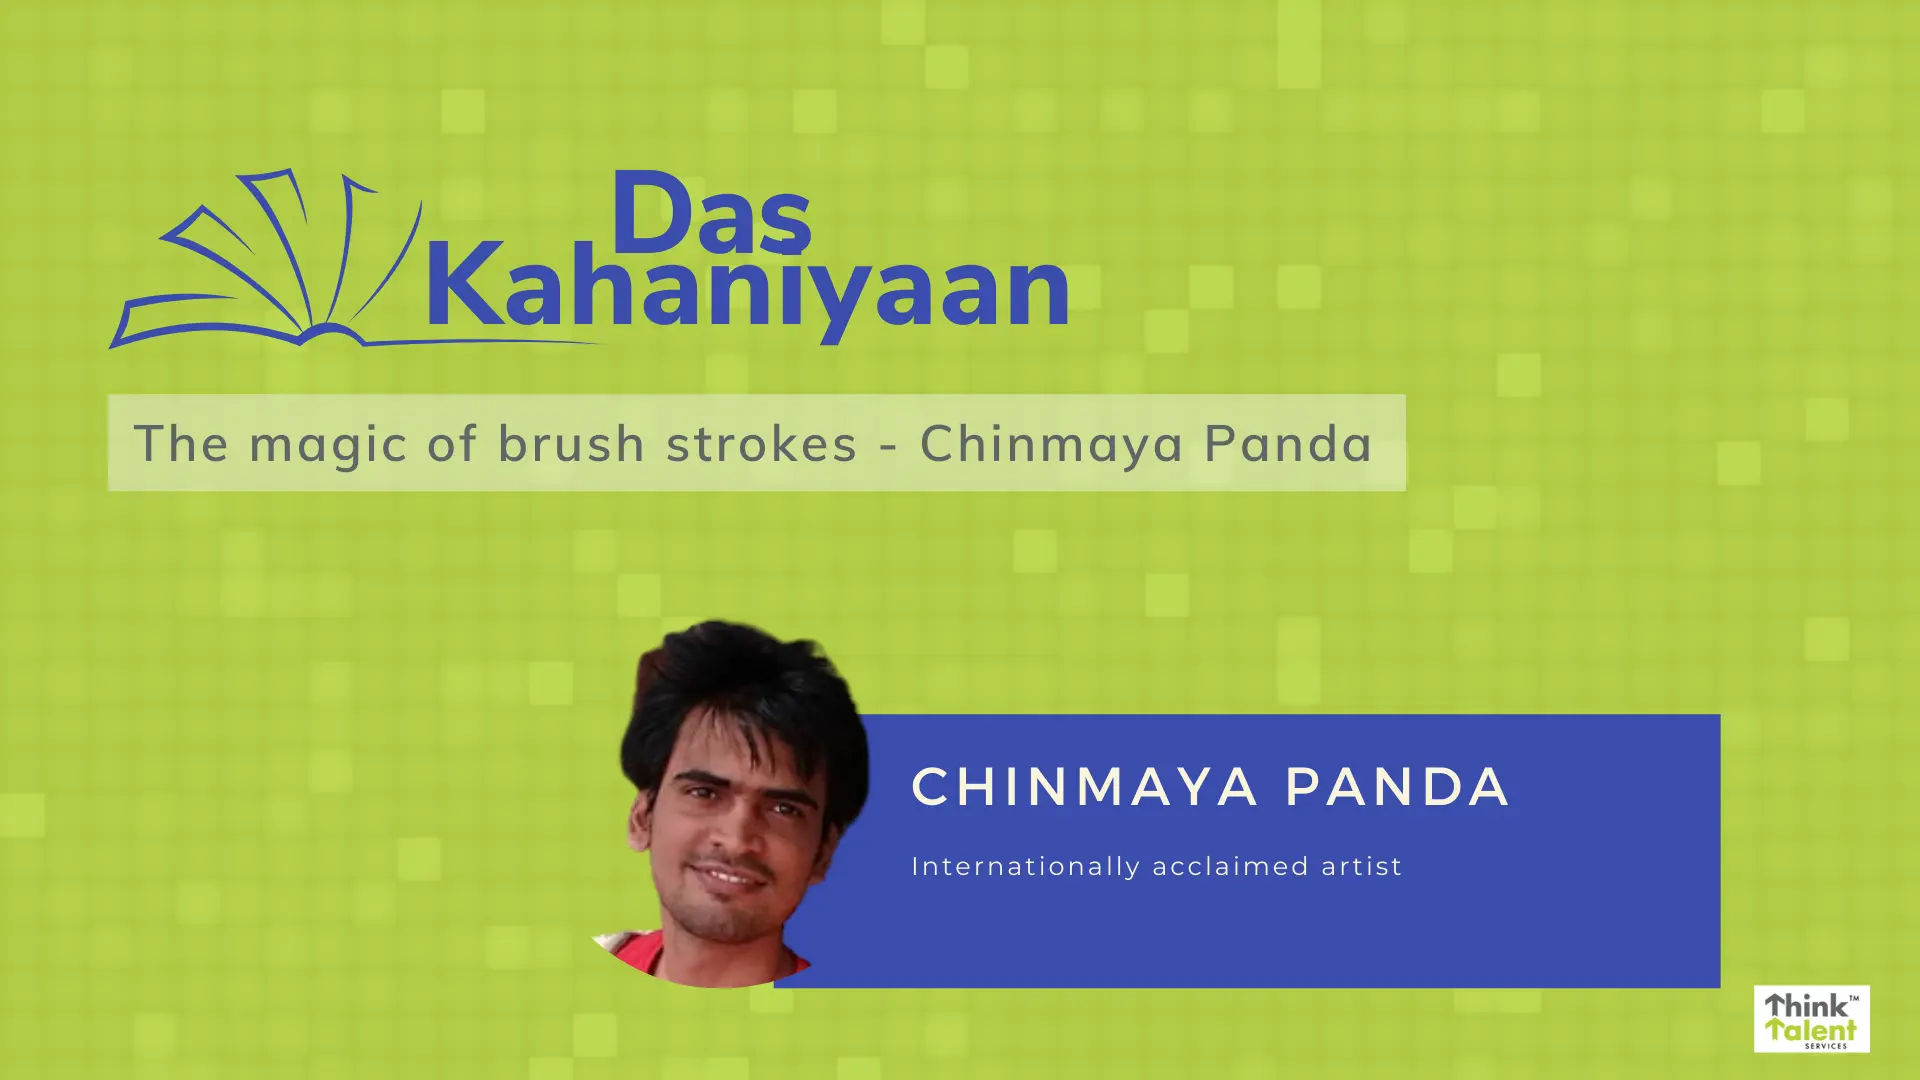 Chinmaya Panda: The magic of brush strokes